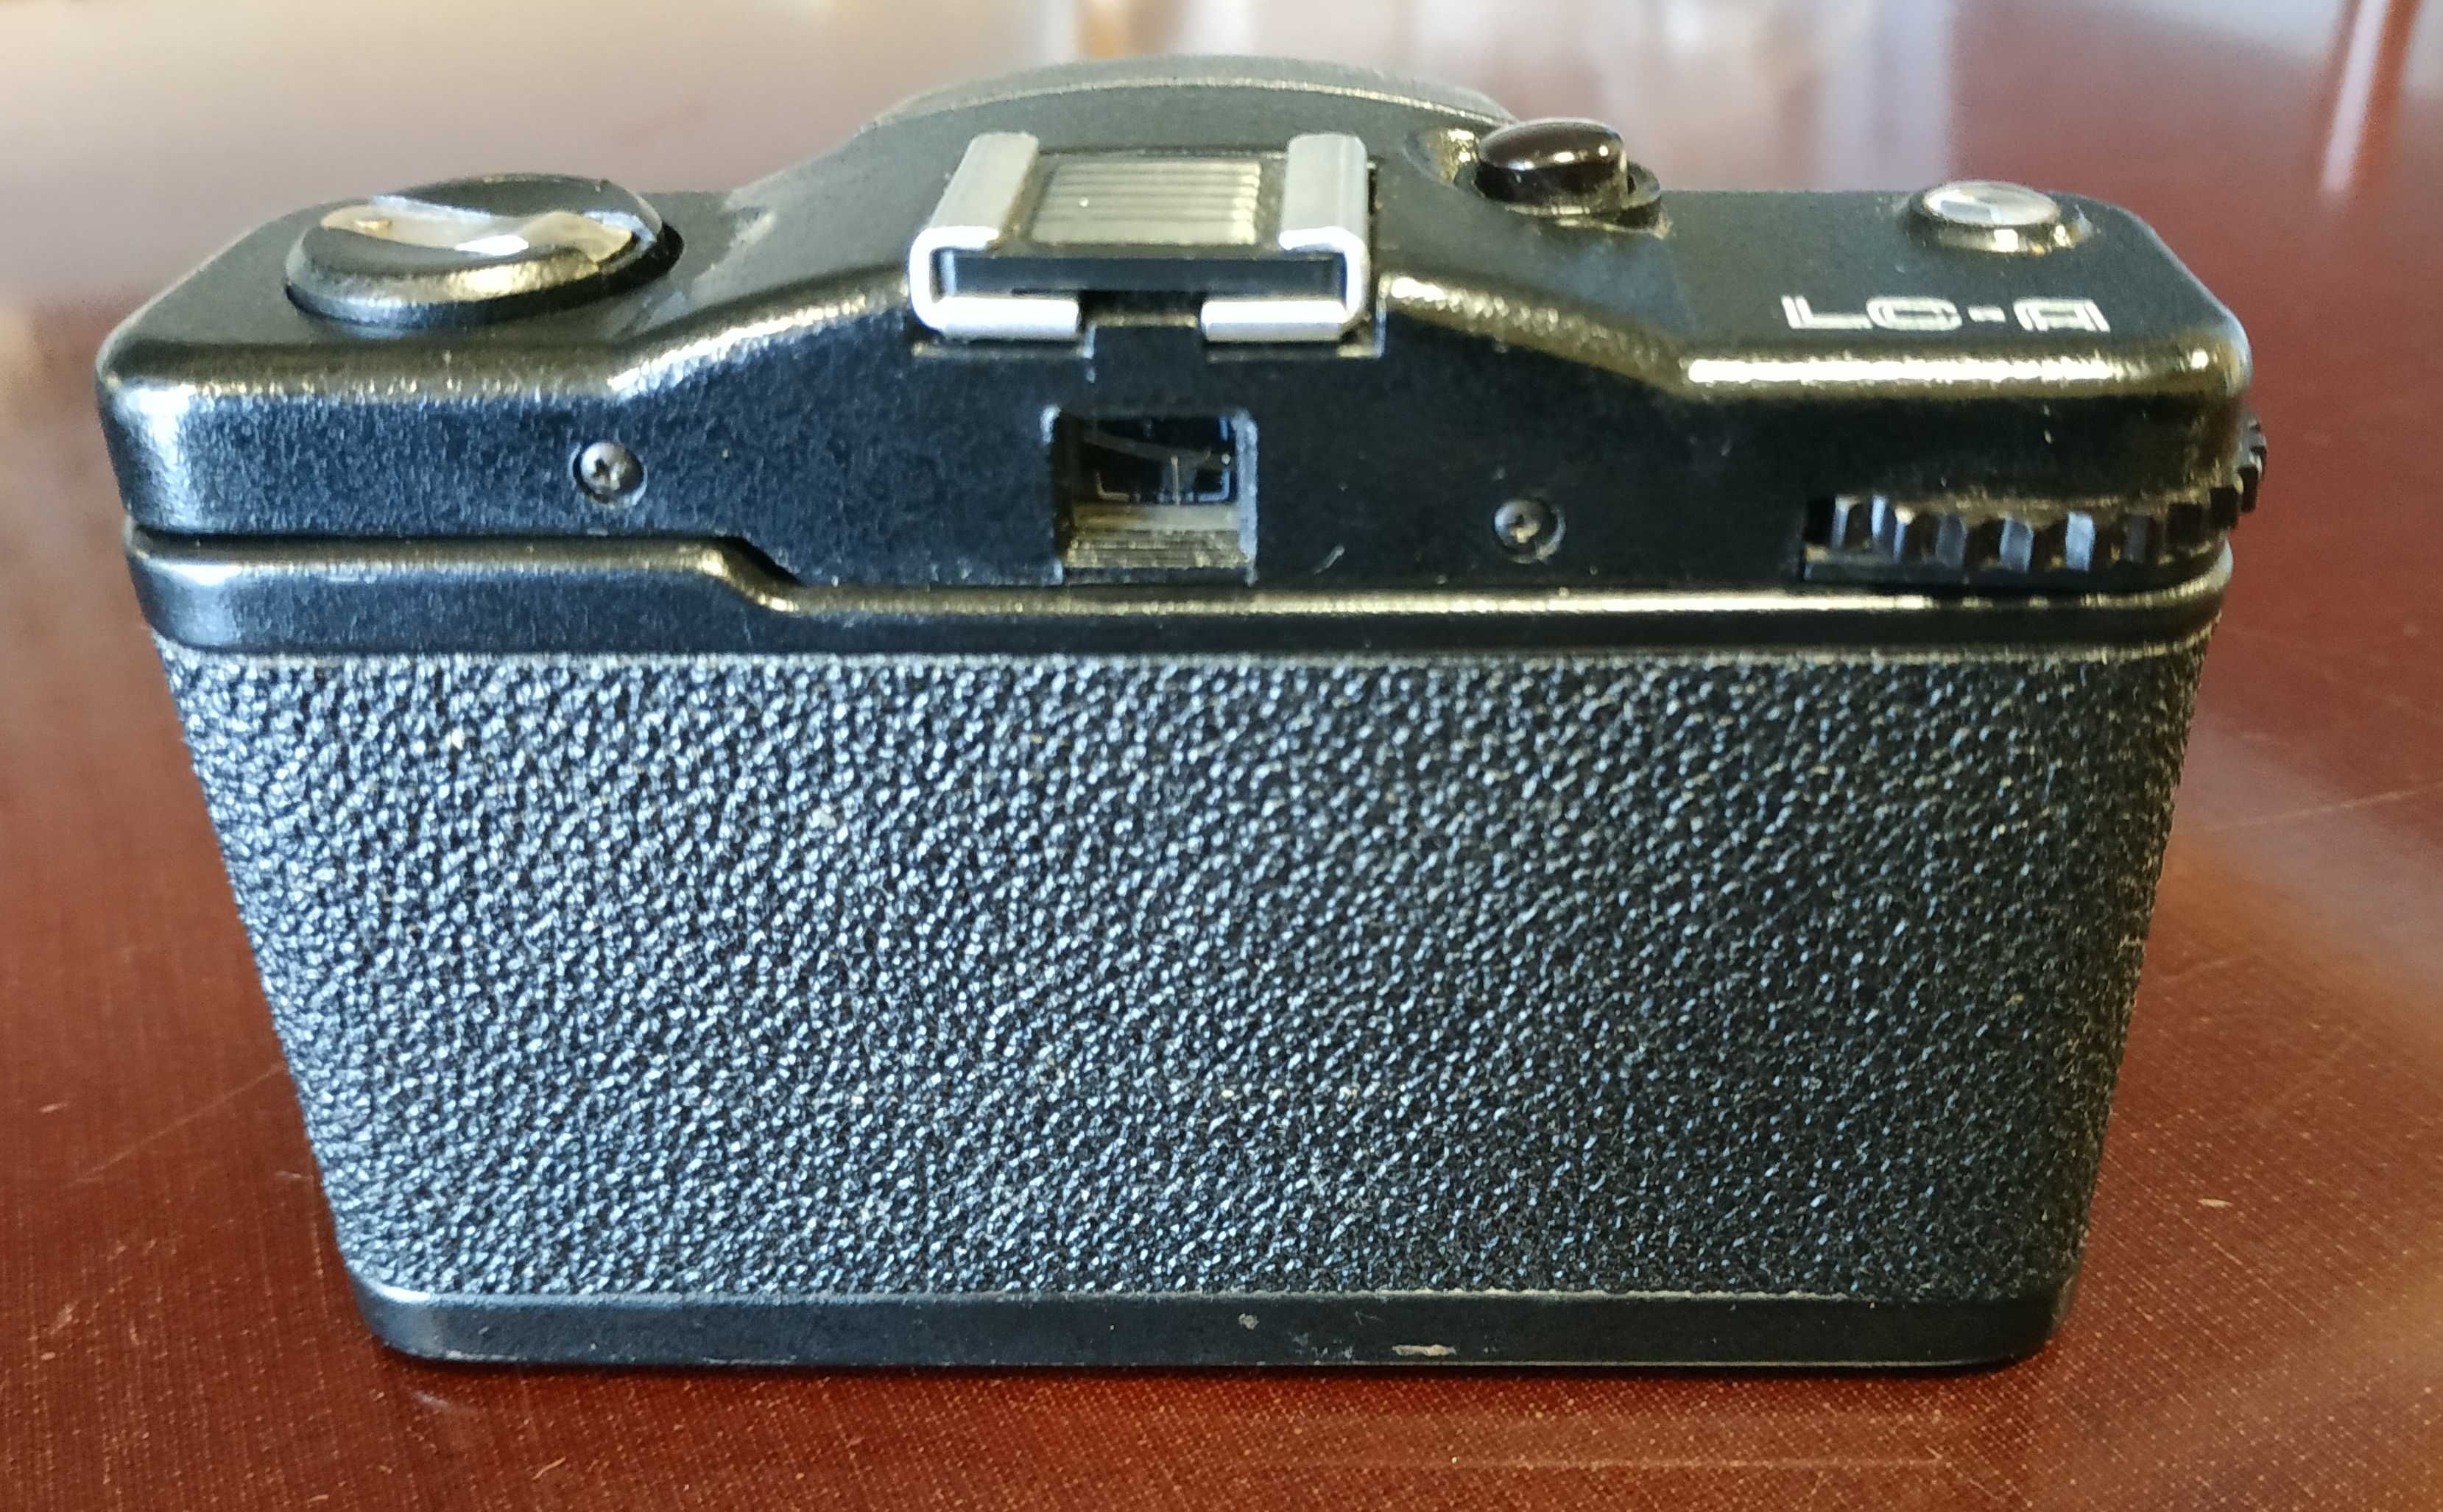 Lomo LC-A Ломо фотоаппарат с объективом Minitar-1